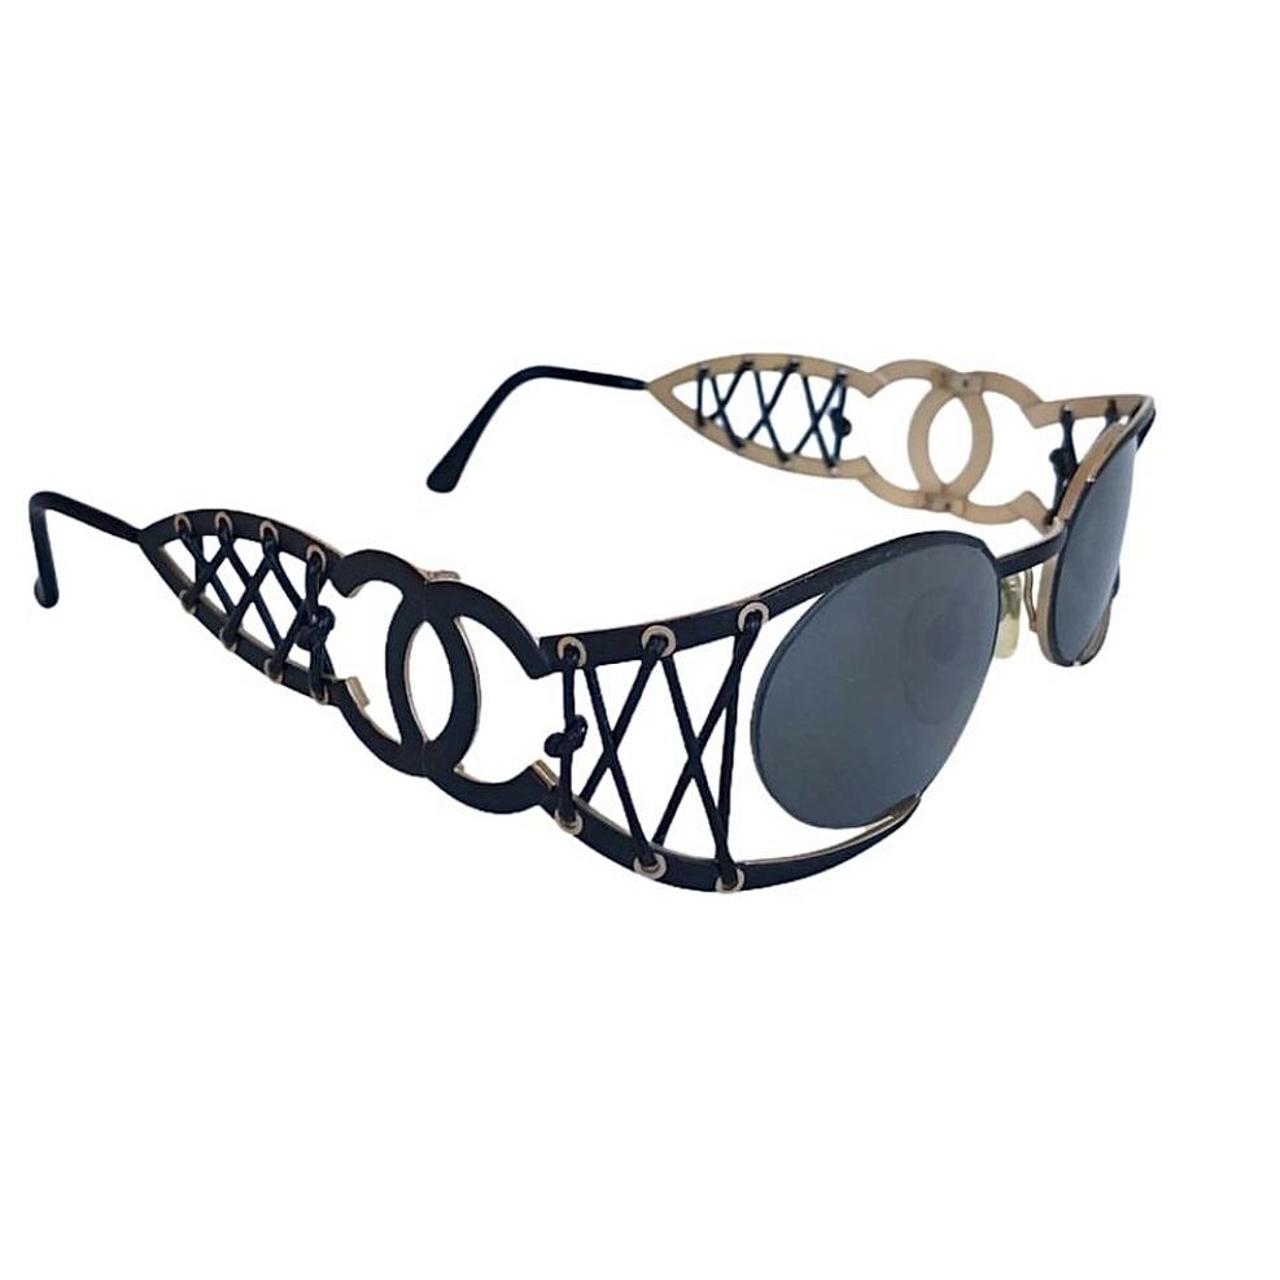 Vintage Chanel PROTOTYPE sunglasses!!! These were - Depop